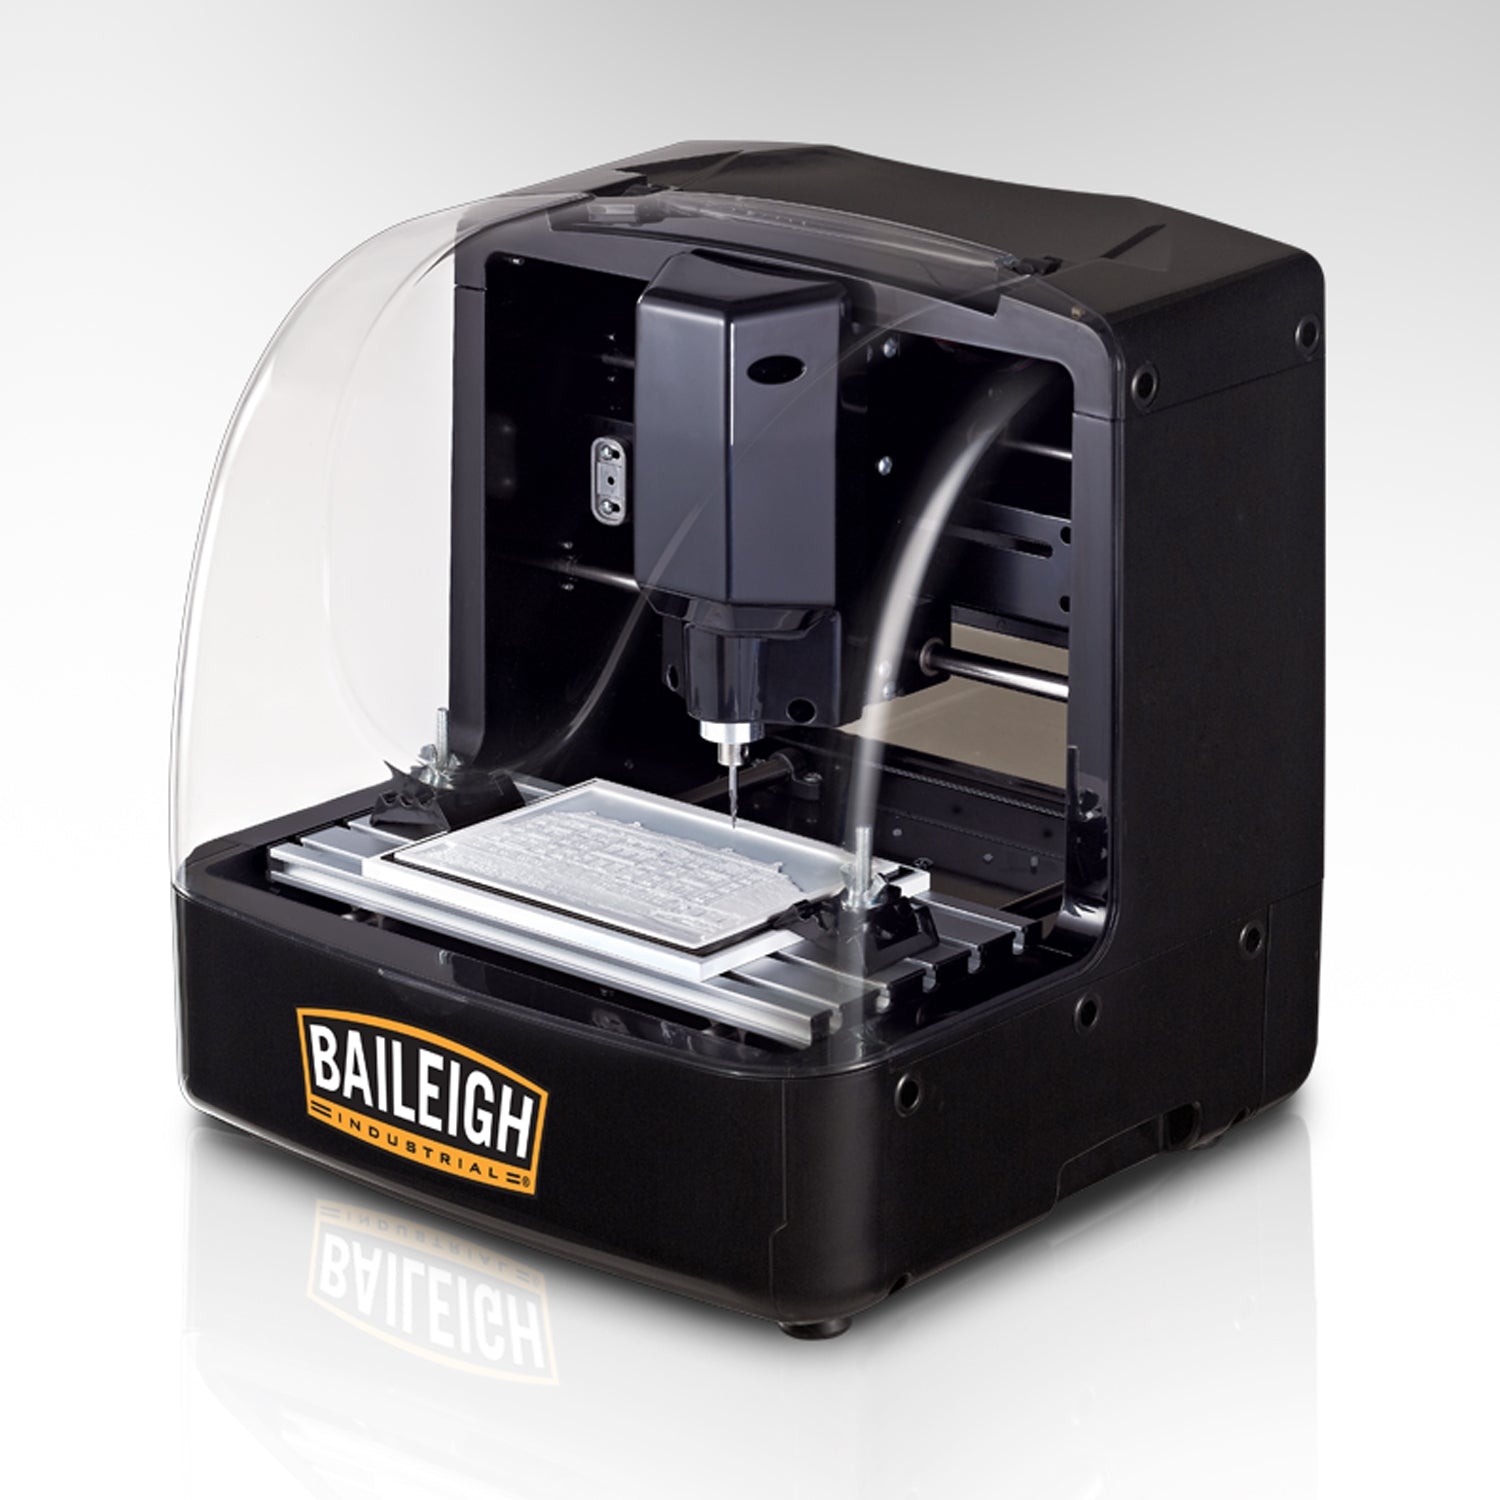 Baileigh DEM-0906 110V 9" x 6" CNC Desktop Engraver, Laser Ready (Sold Separately) w/ Software Package